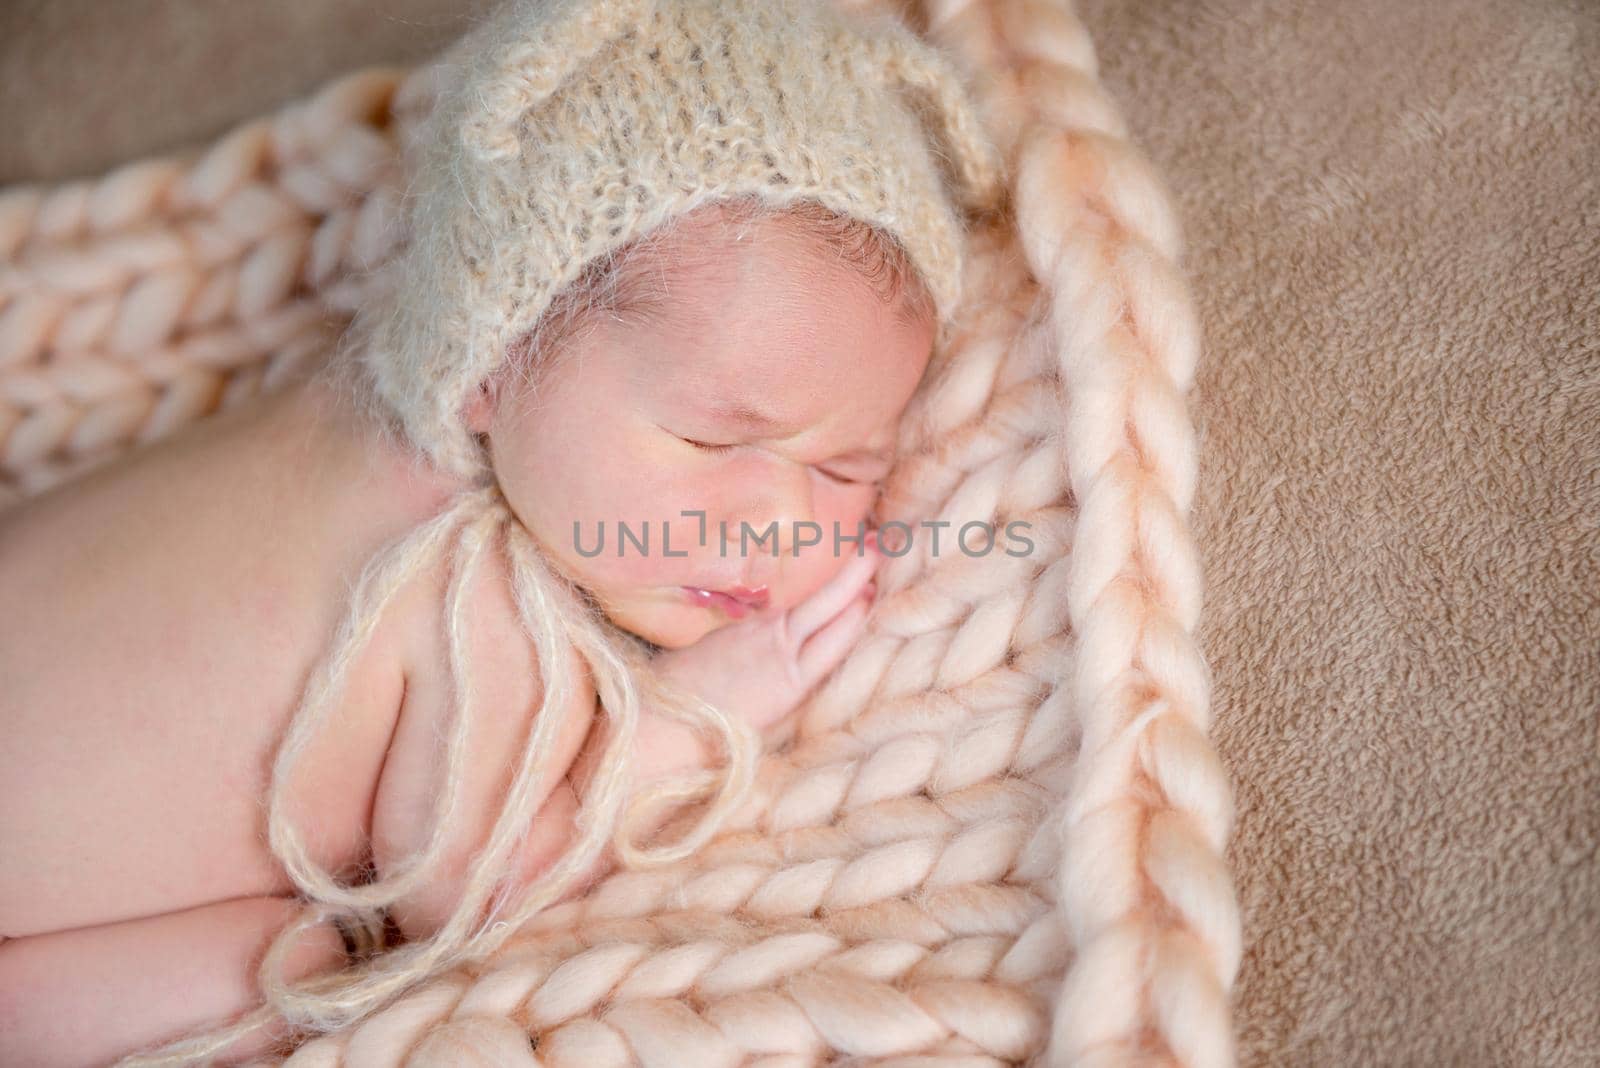 Sweetie newborn baby in beige bonnet sleeps on his tummy on knitted rug.